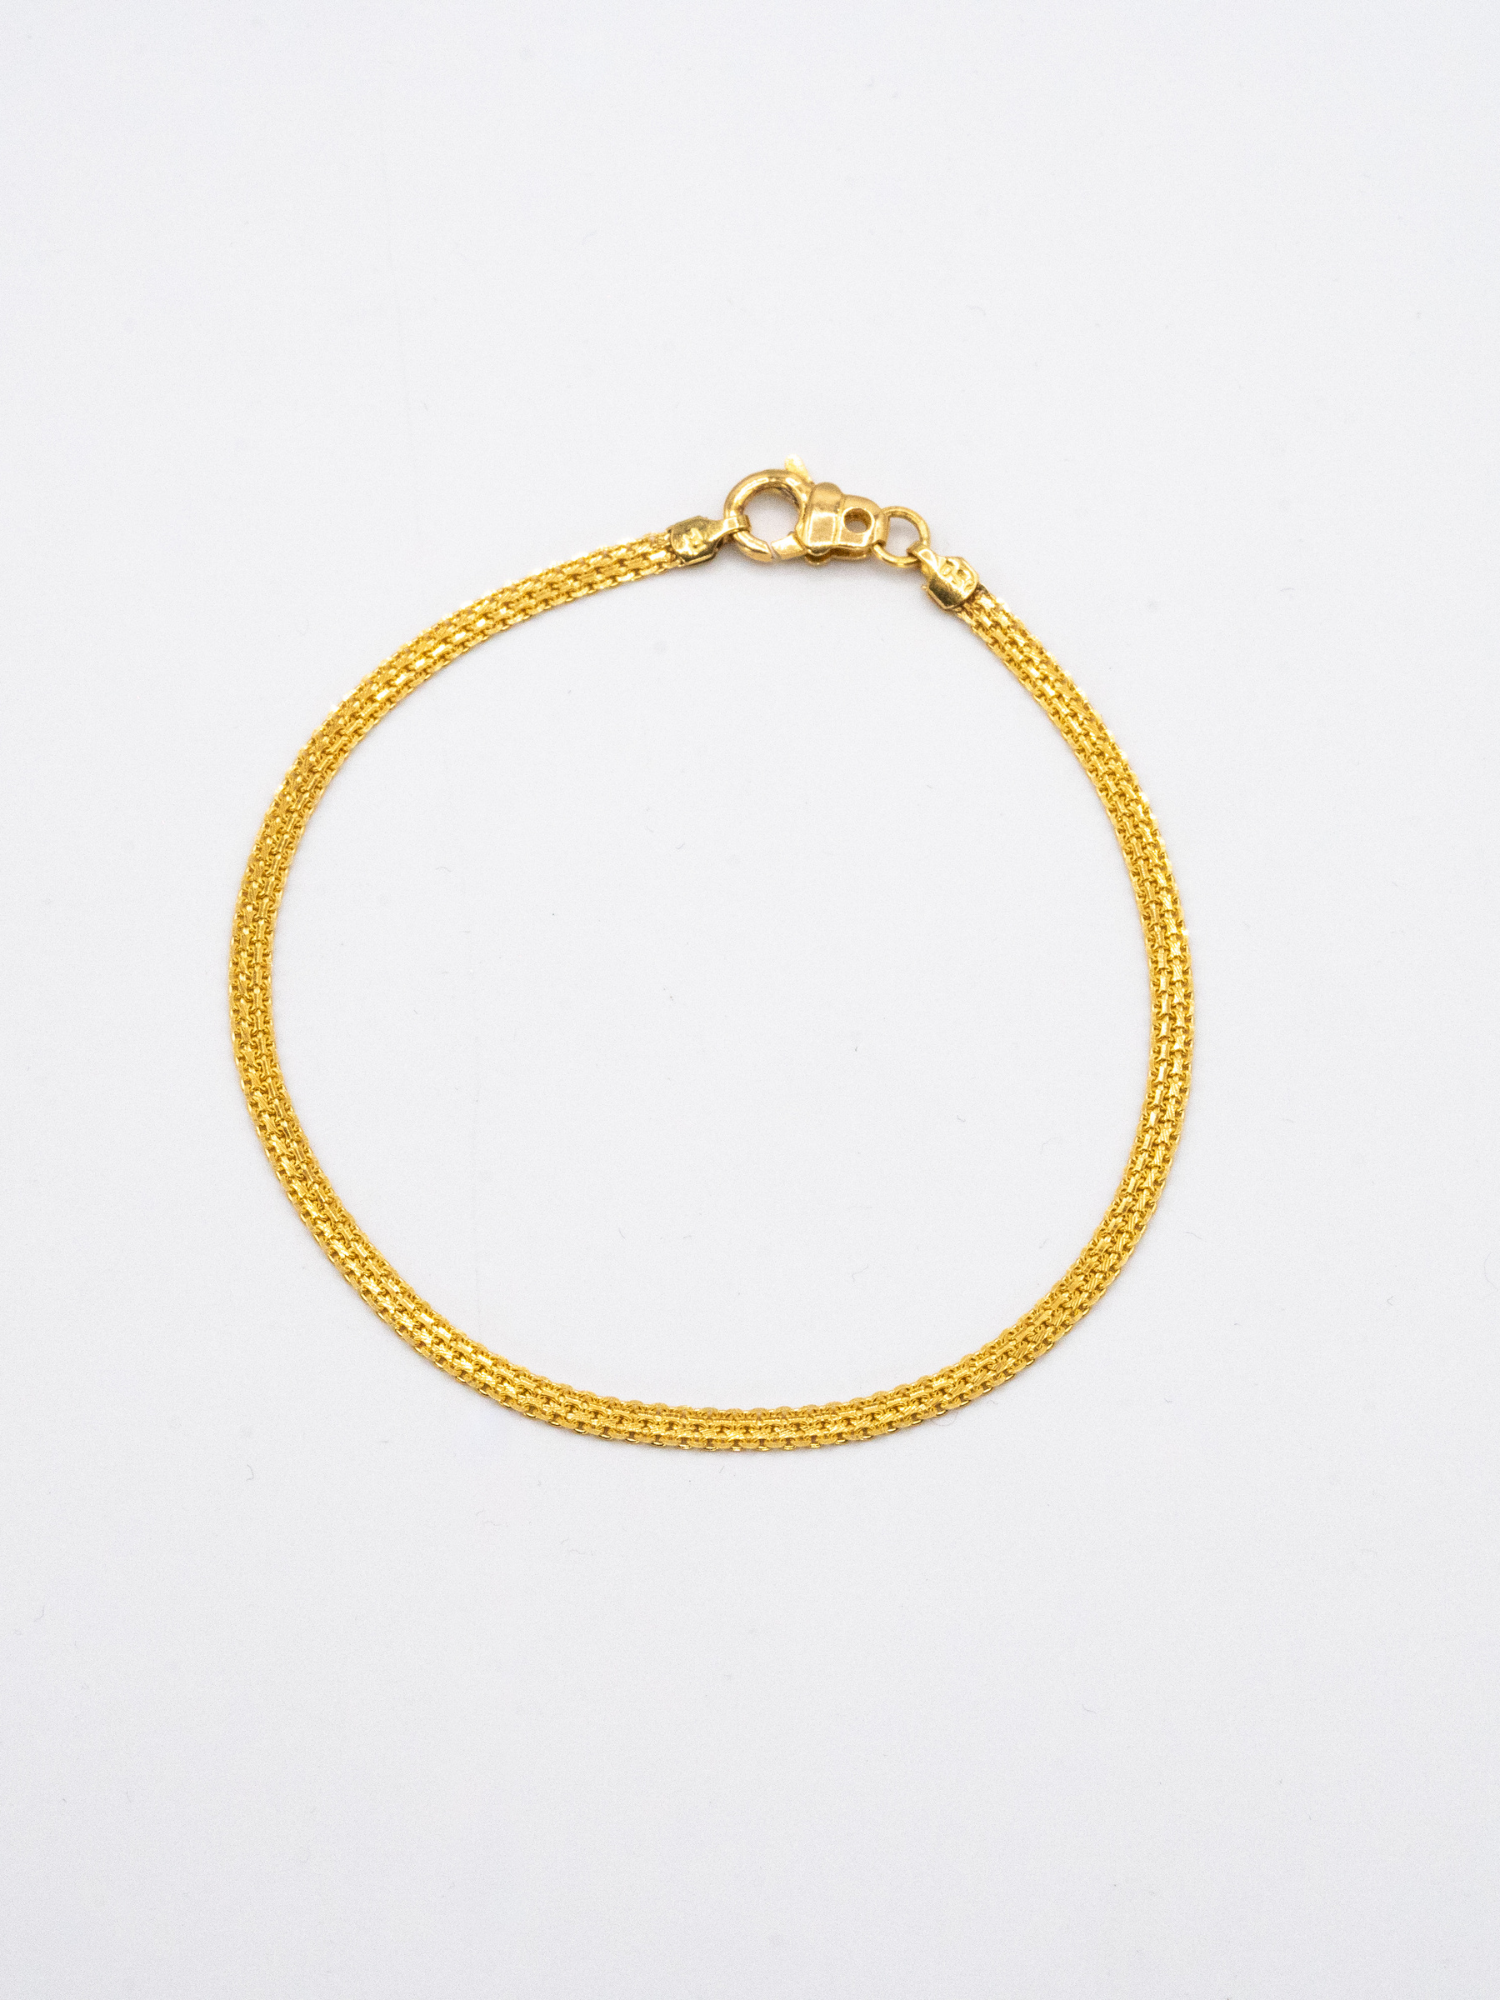 WOMEN'S 18 KARAT YELLOW GOLD FLAT CHAIN BRACELET - 7 inch Yellow Gold 18 Karat Gold